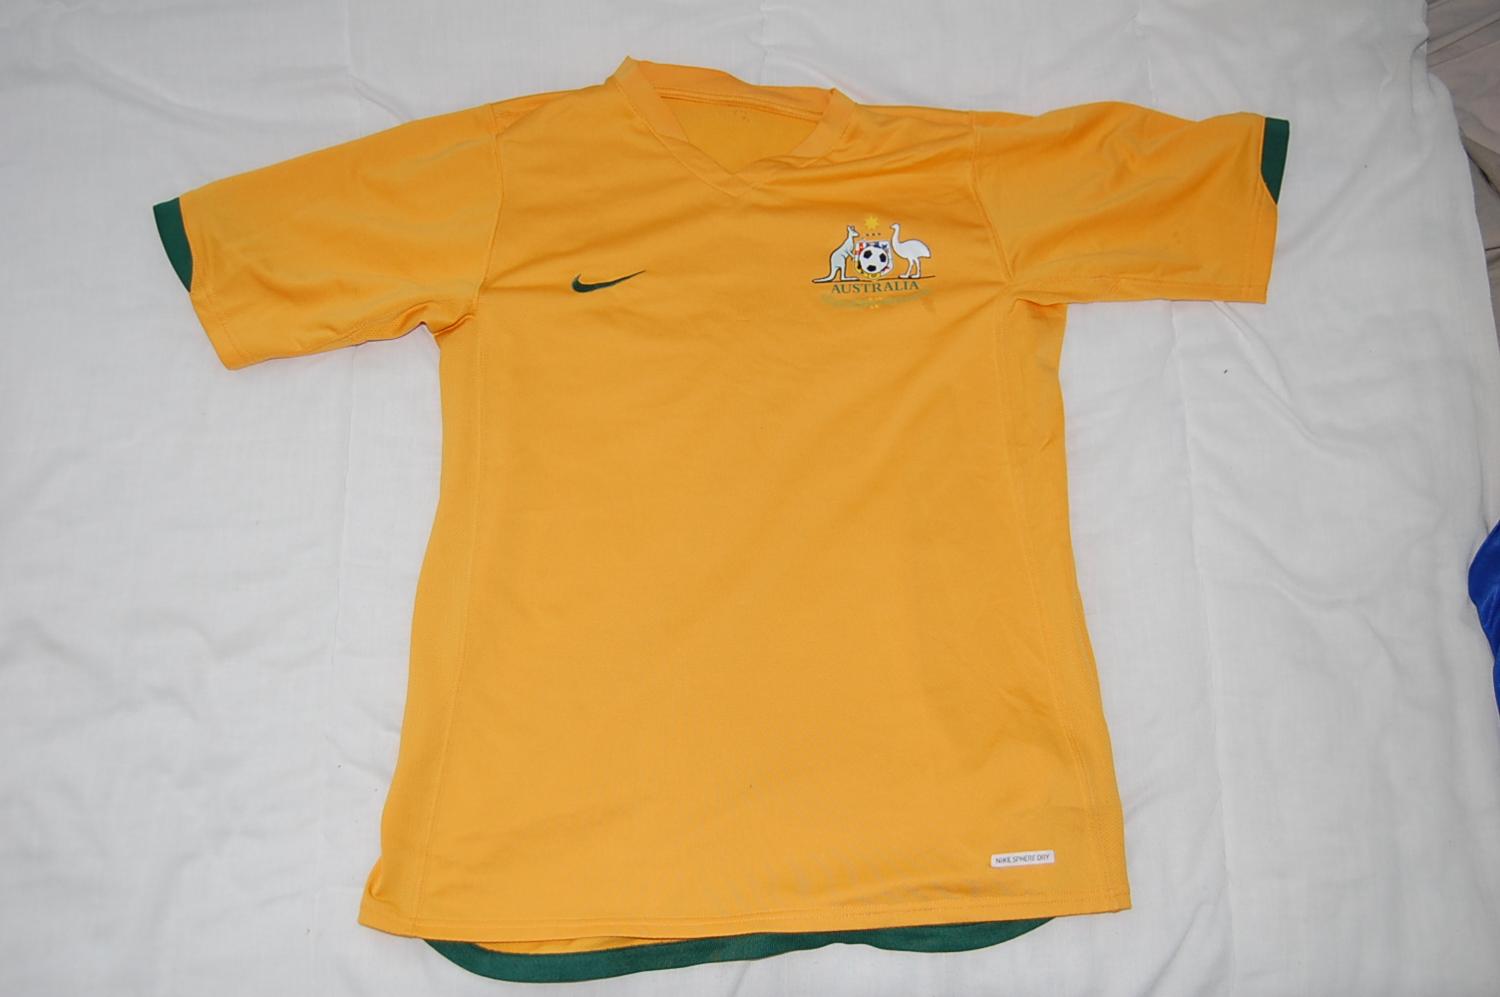 Set Flock Nameset home Trikot jersey shirt Australien Australia 2006 